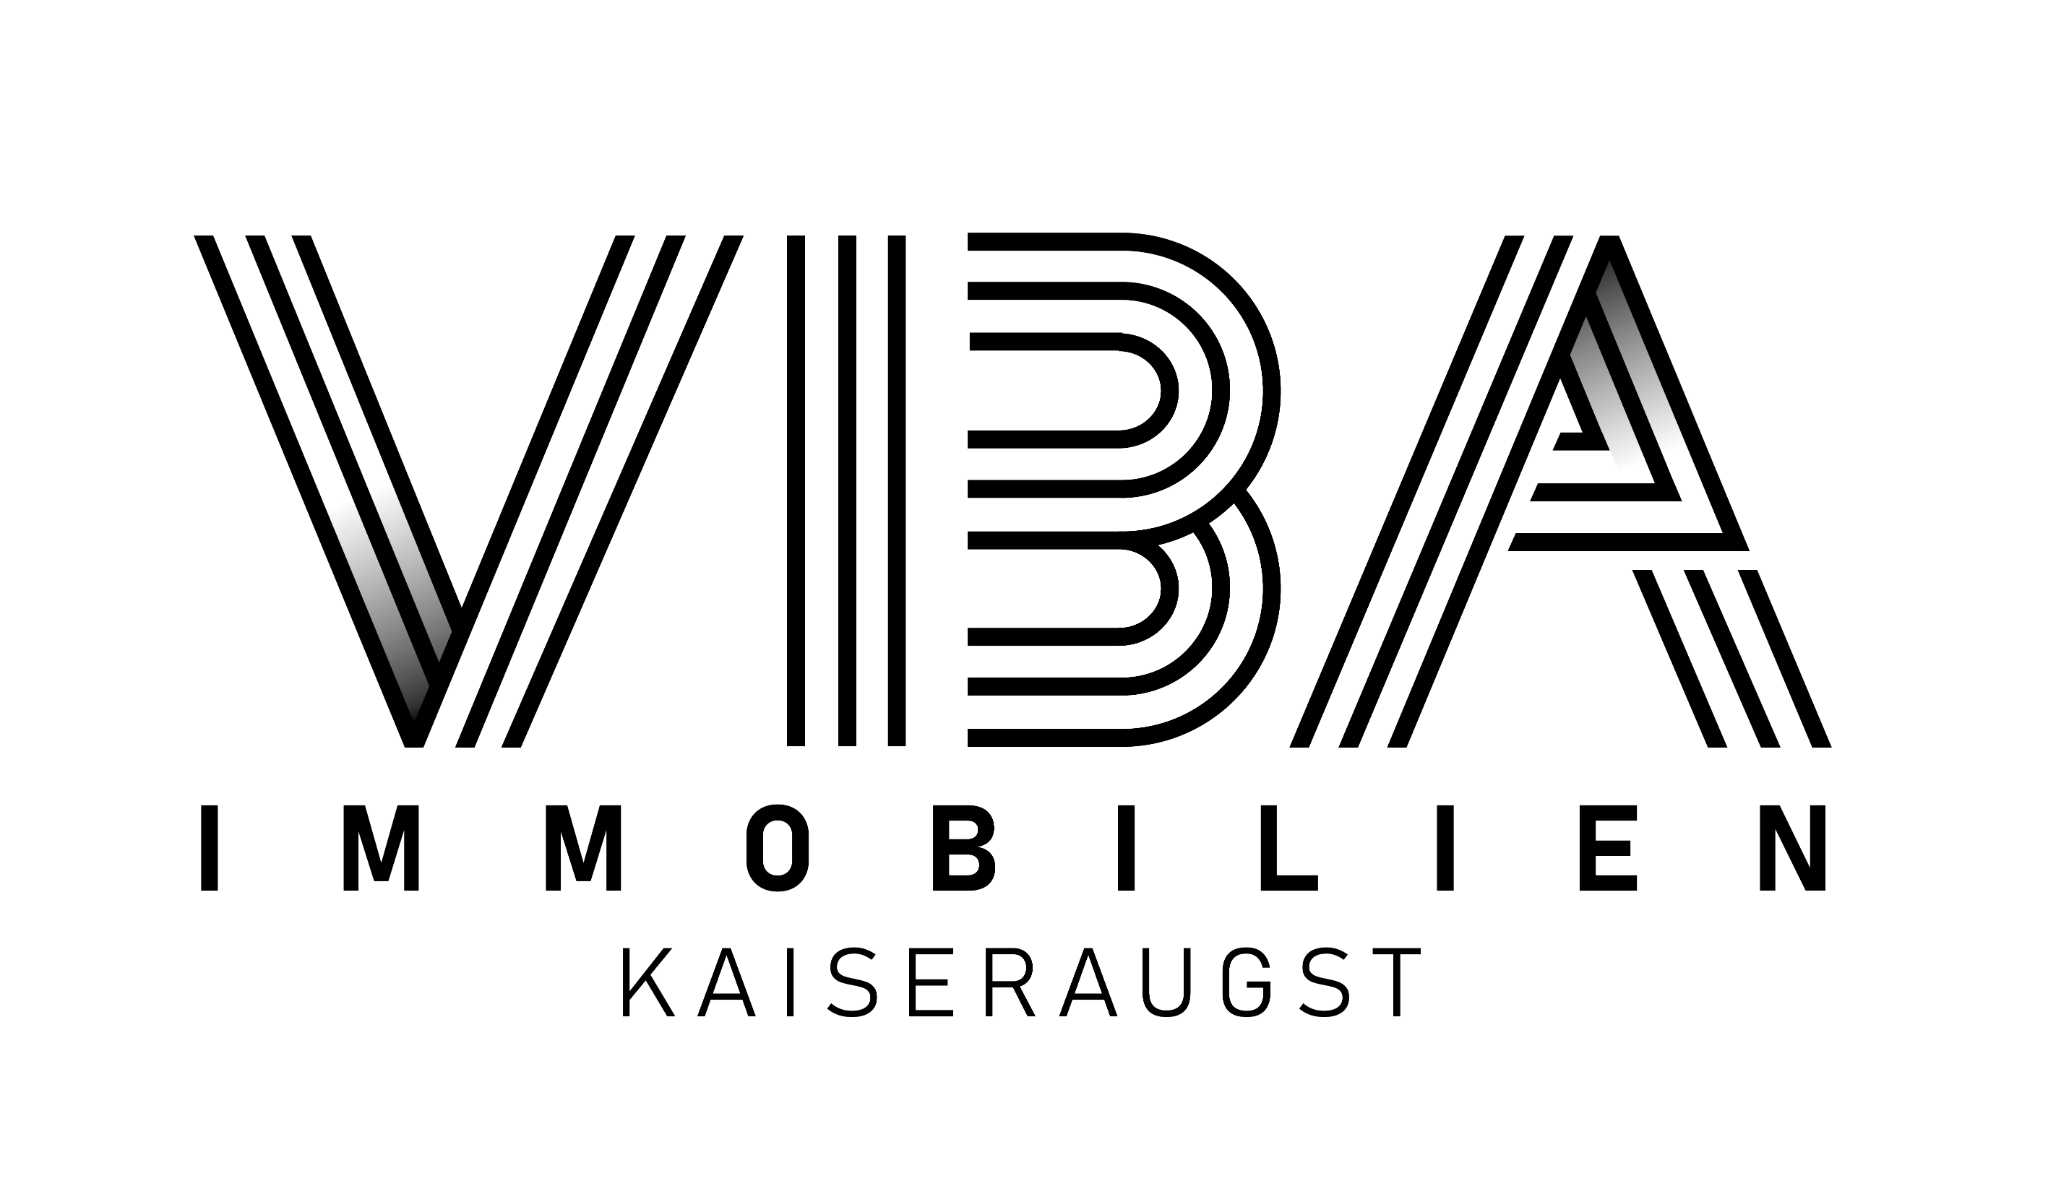 ViBa Immobilien GmbH